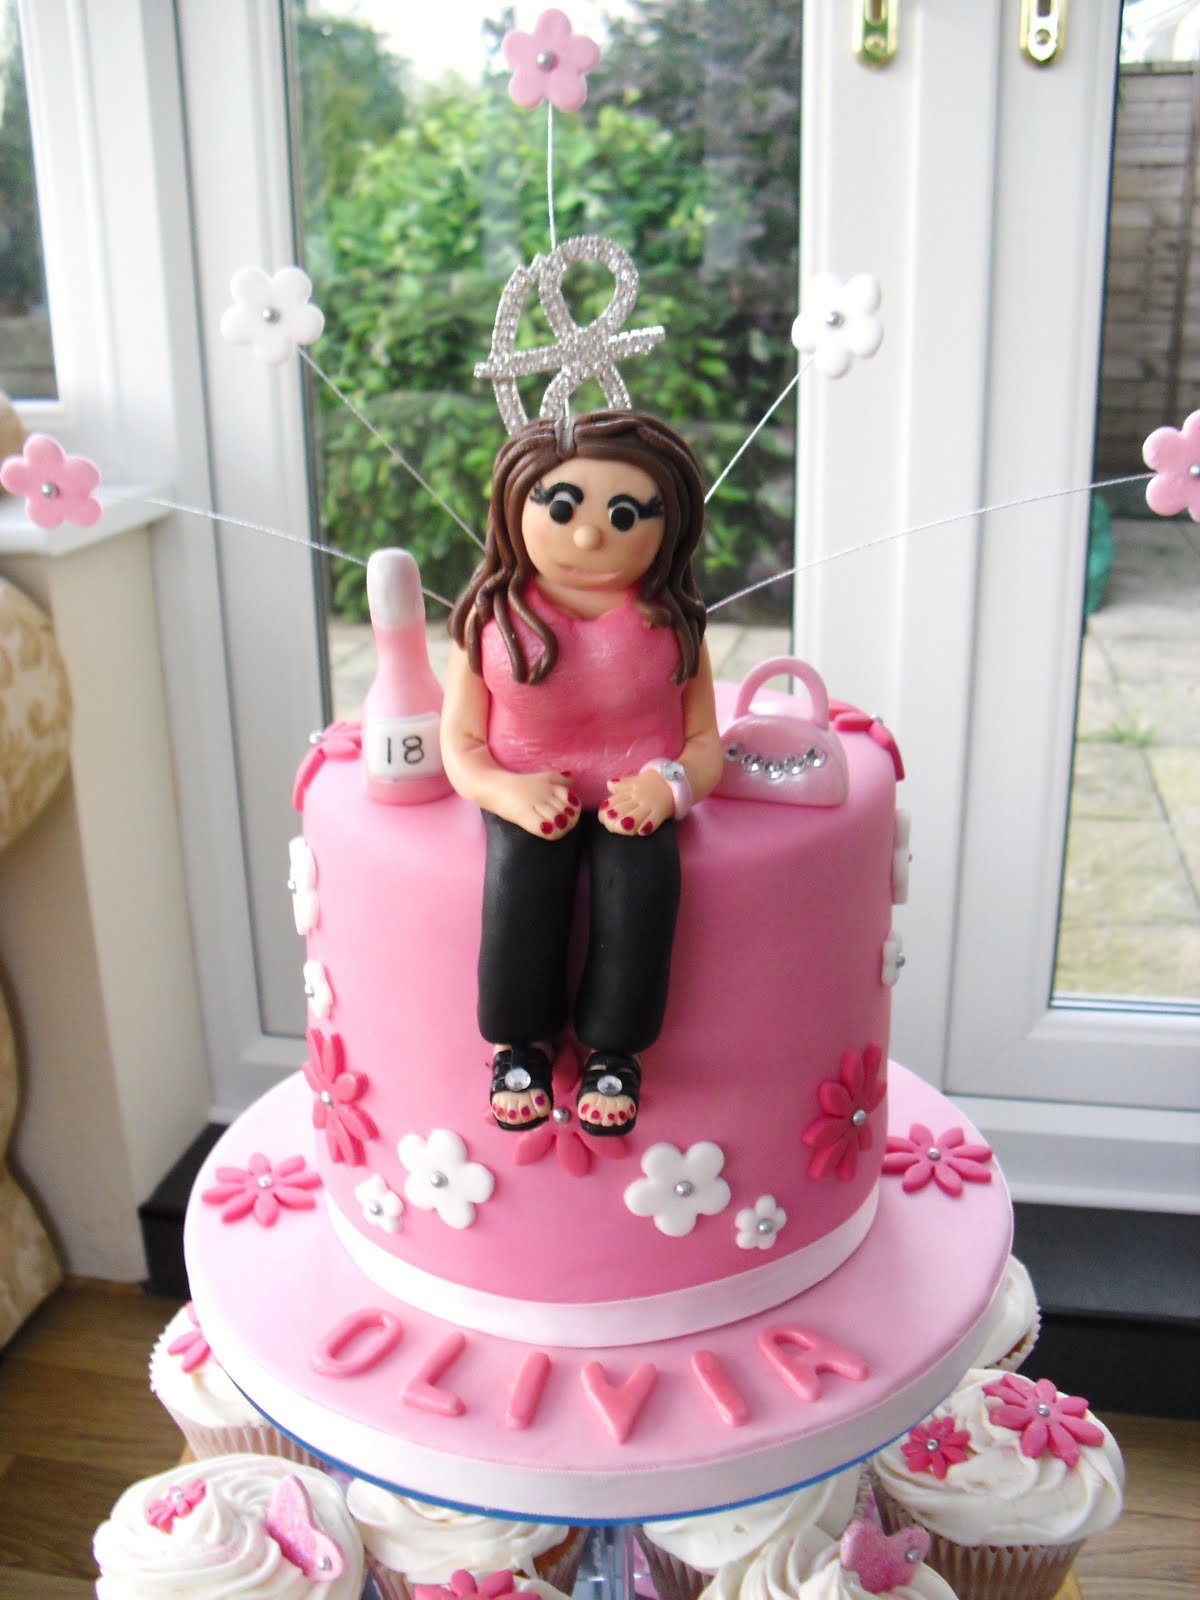 Cake Walk: Olivia's 18th Birthday Cake